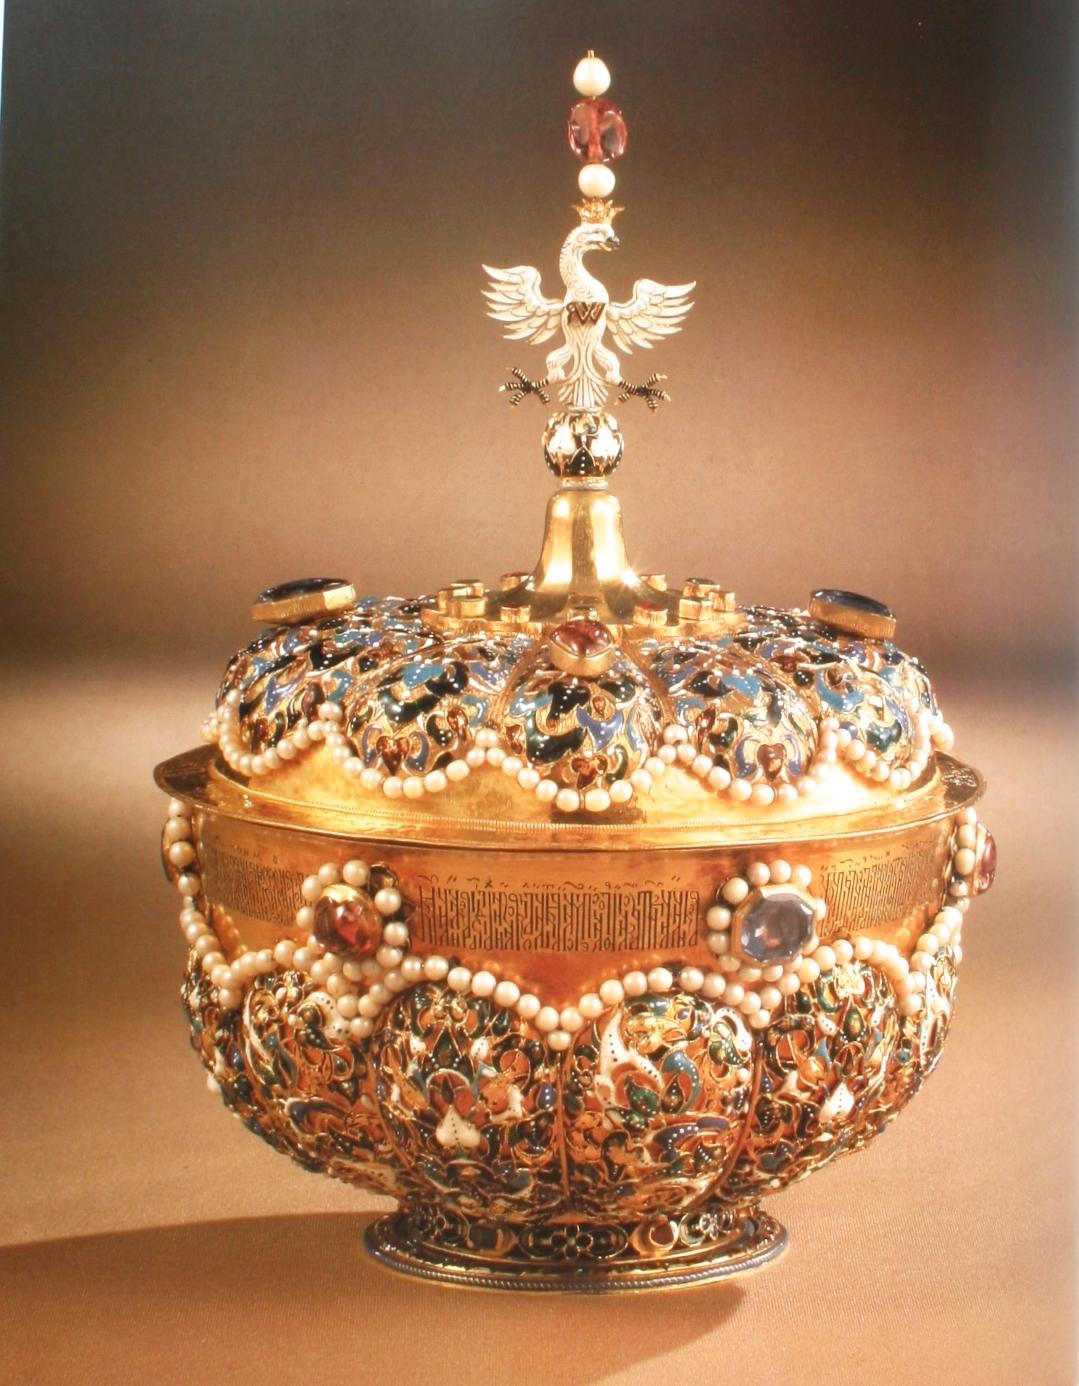 Princely Treasures by Geza Von Habsburg, First Edition 10